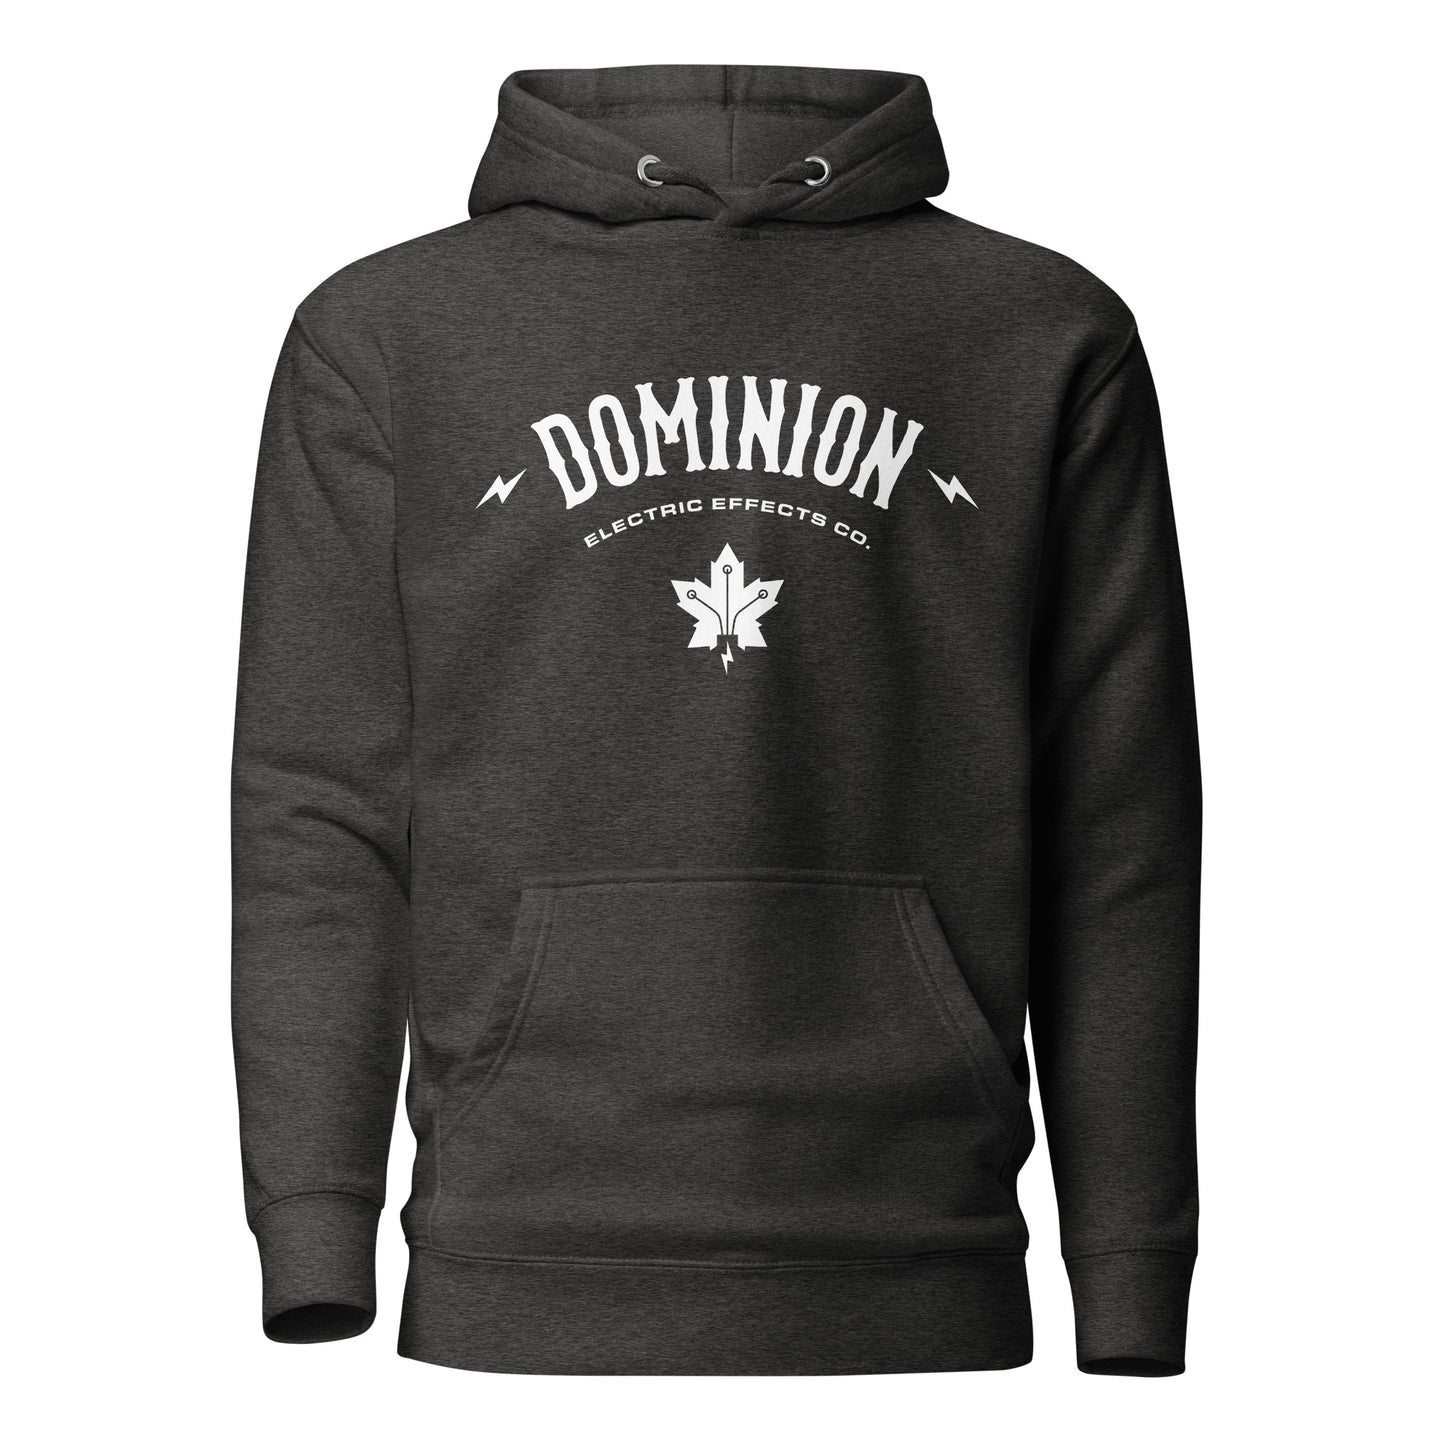 Dominion Electric Hoodie - Maroon/Dark Grey